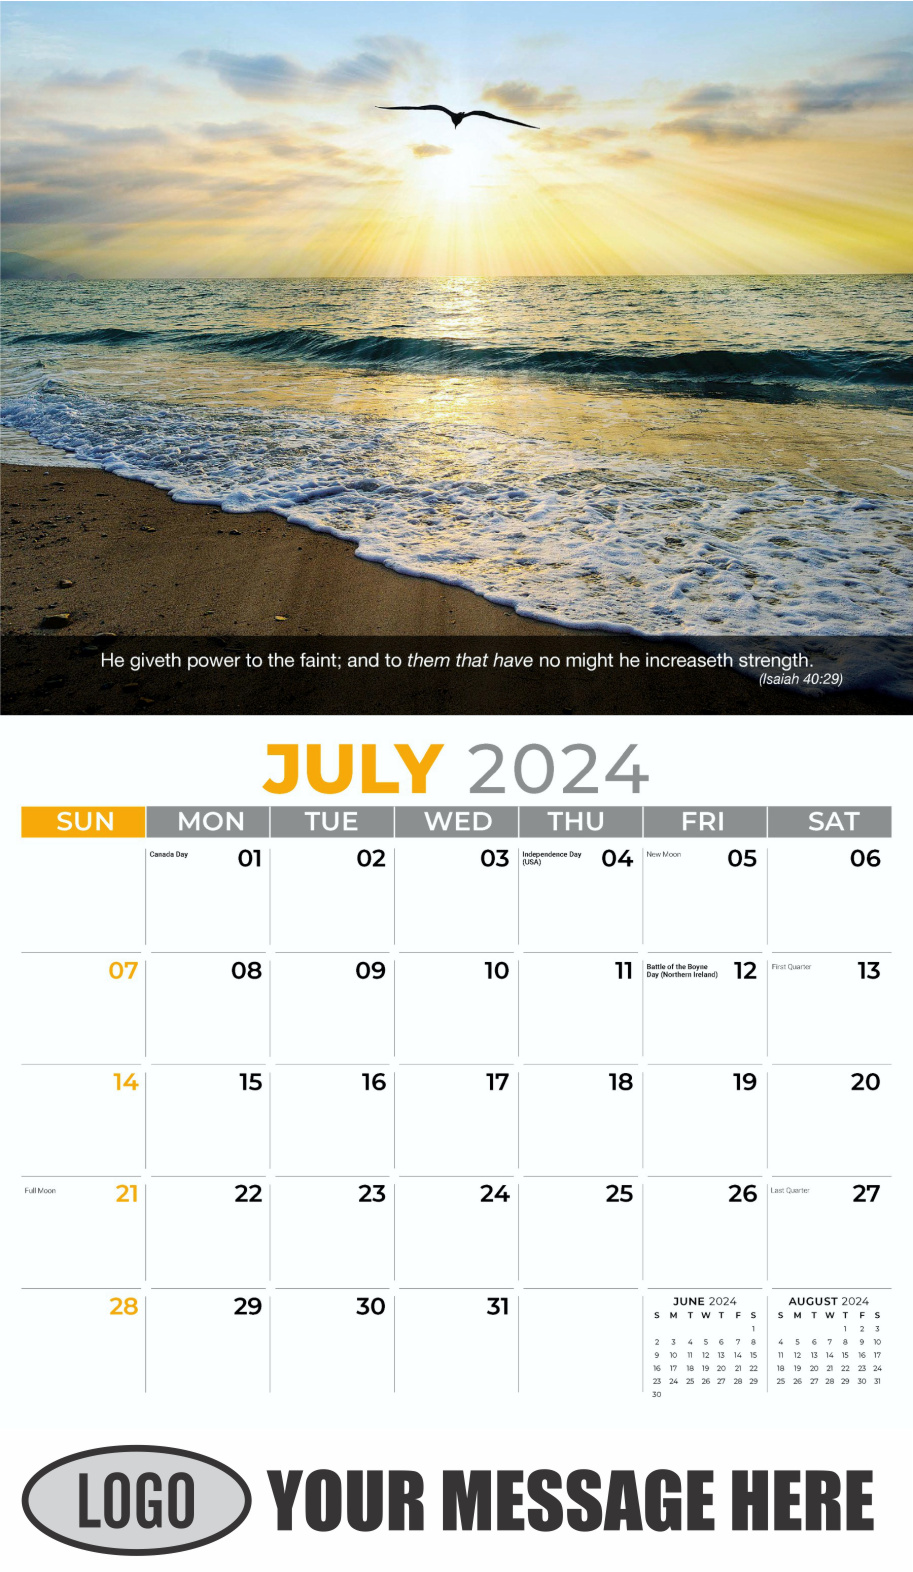 Faith Passages 2024 Christian Business Advertising Calendar - July